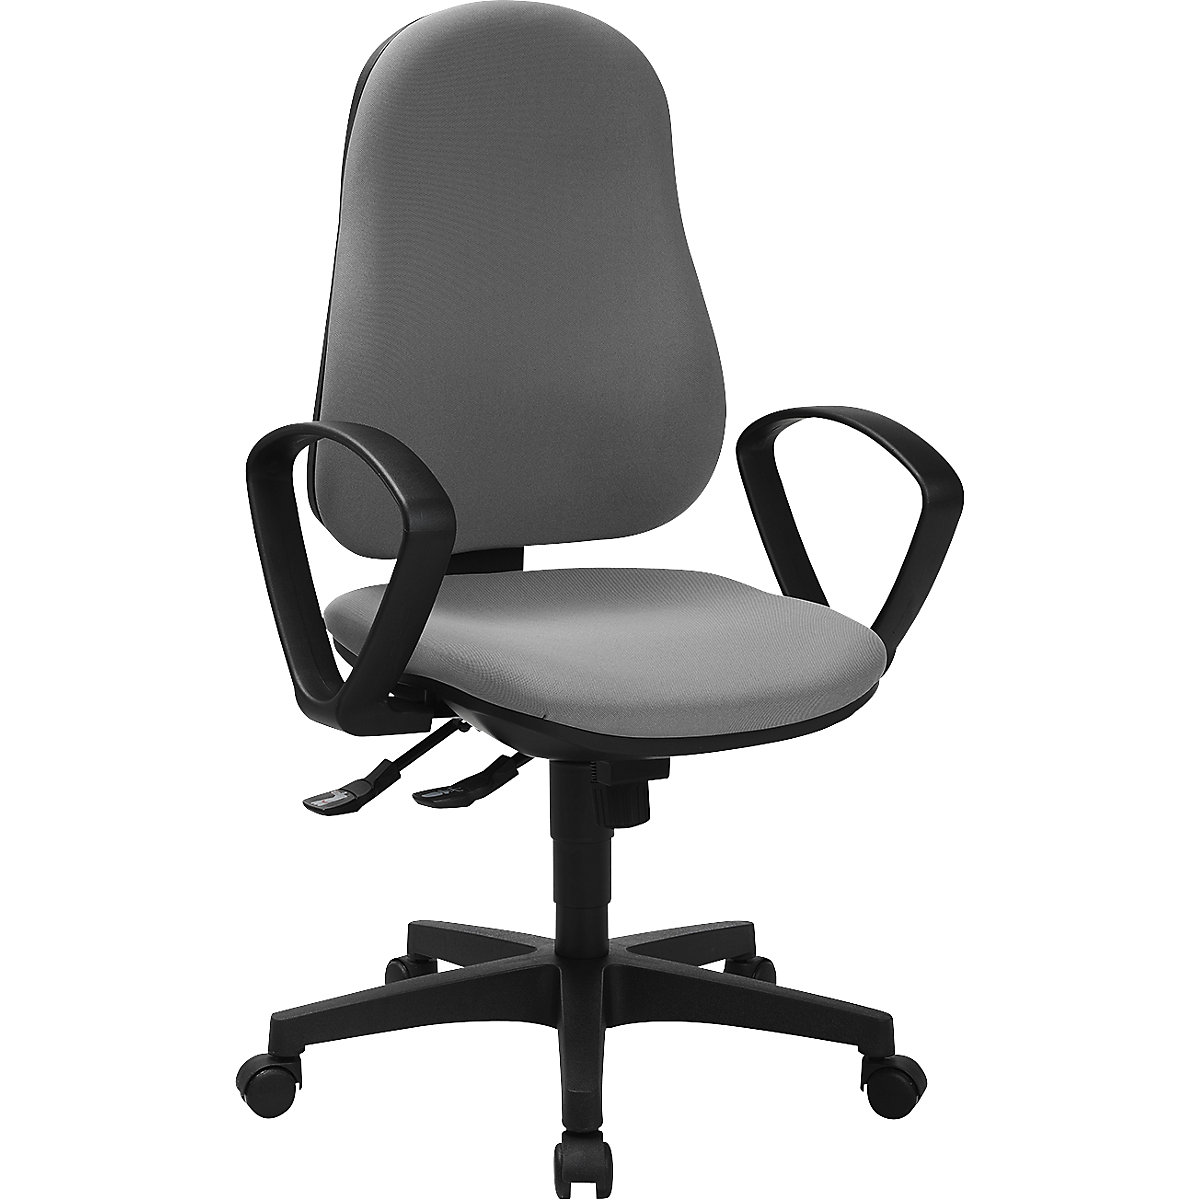 SUPPORT SY ergonomic swivel chair – Topstar